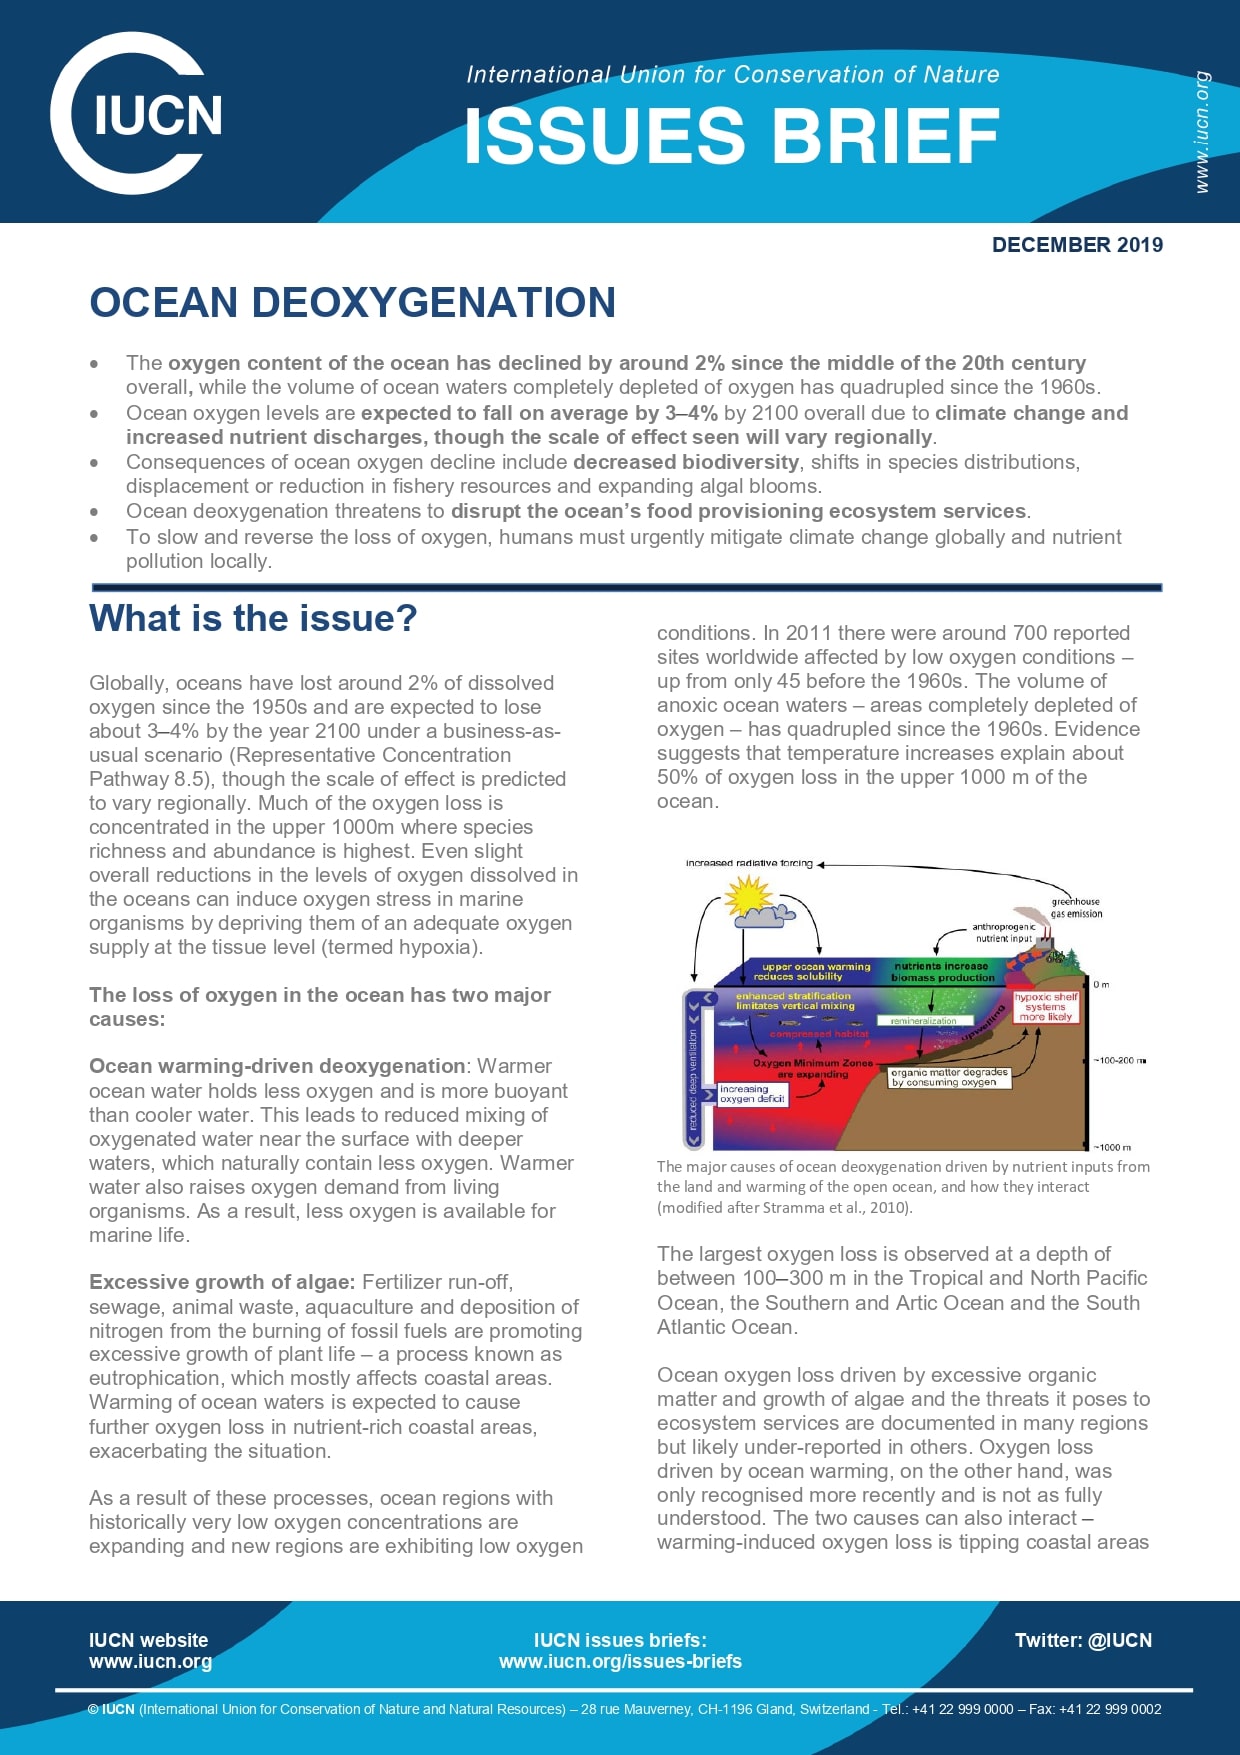 Ocean deoxygenation